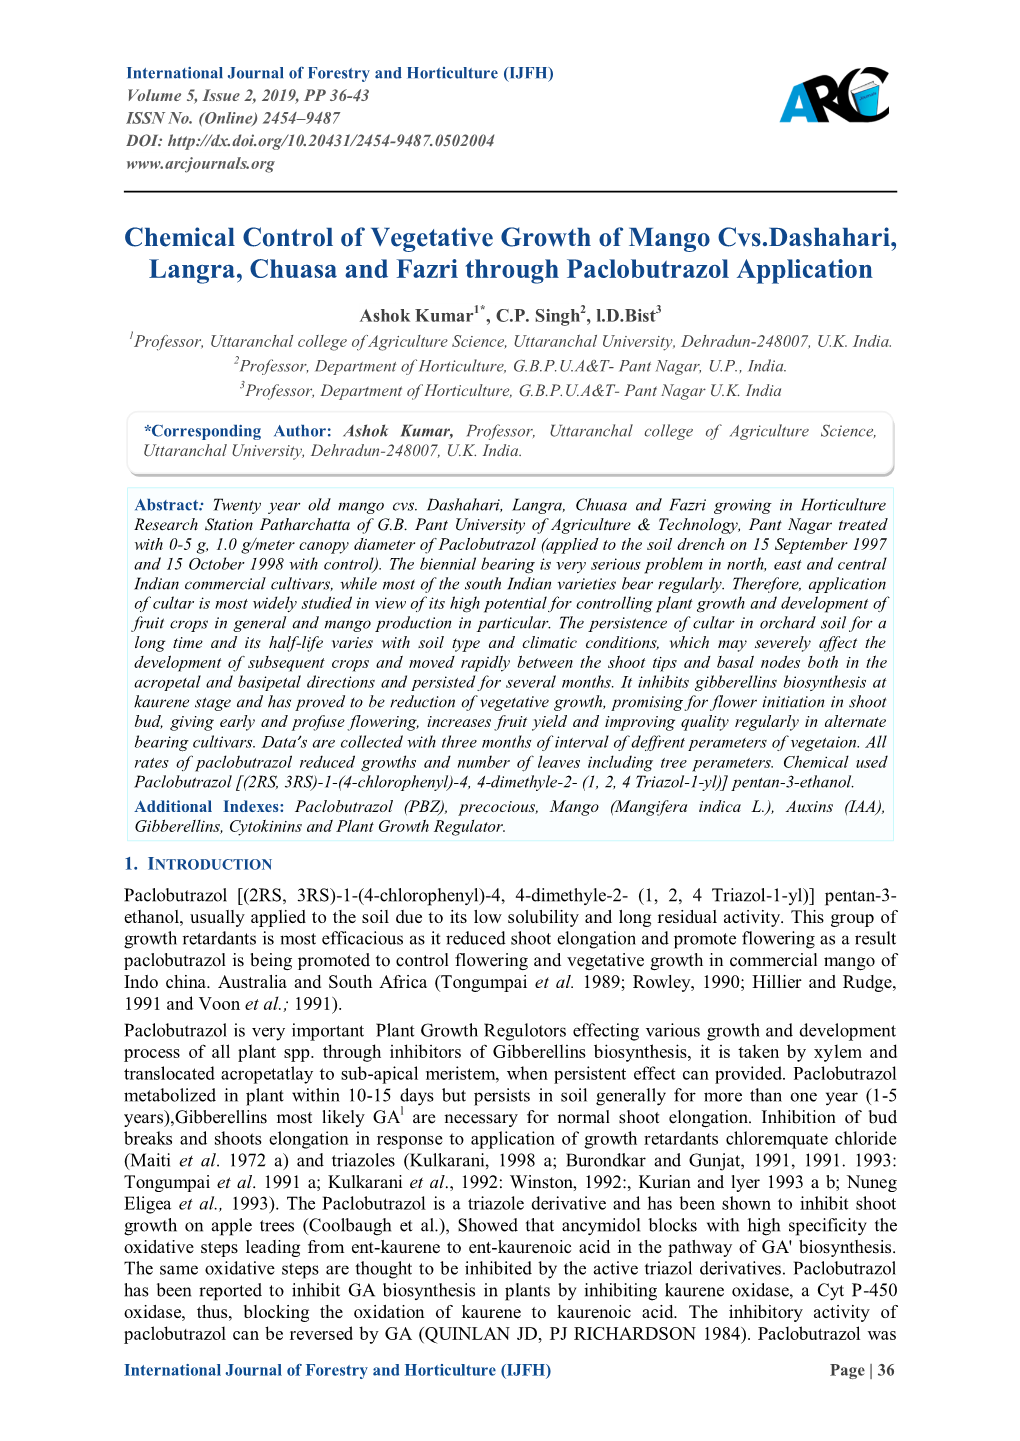 Chemical Control of Vegetative Growth of Mango Cvs.Dashahari, Langra, Chuasa and Fazri Through Paclobutrazol Application